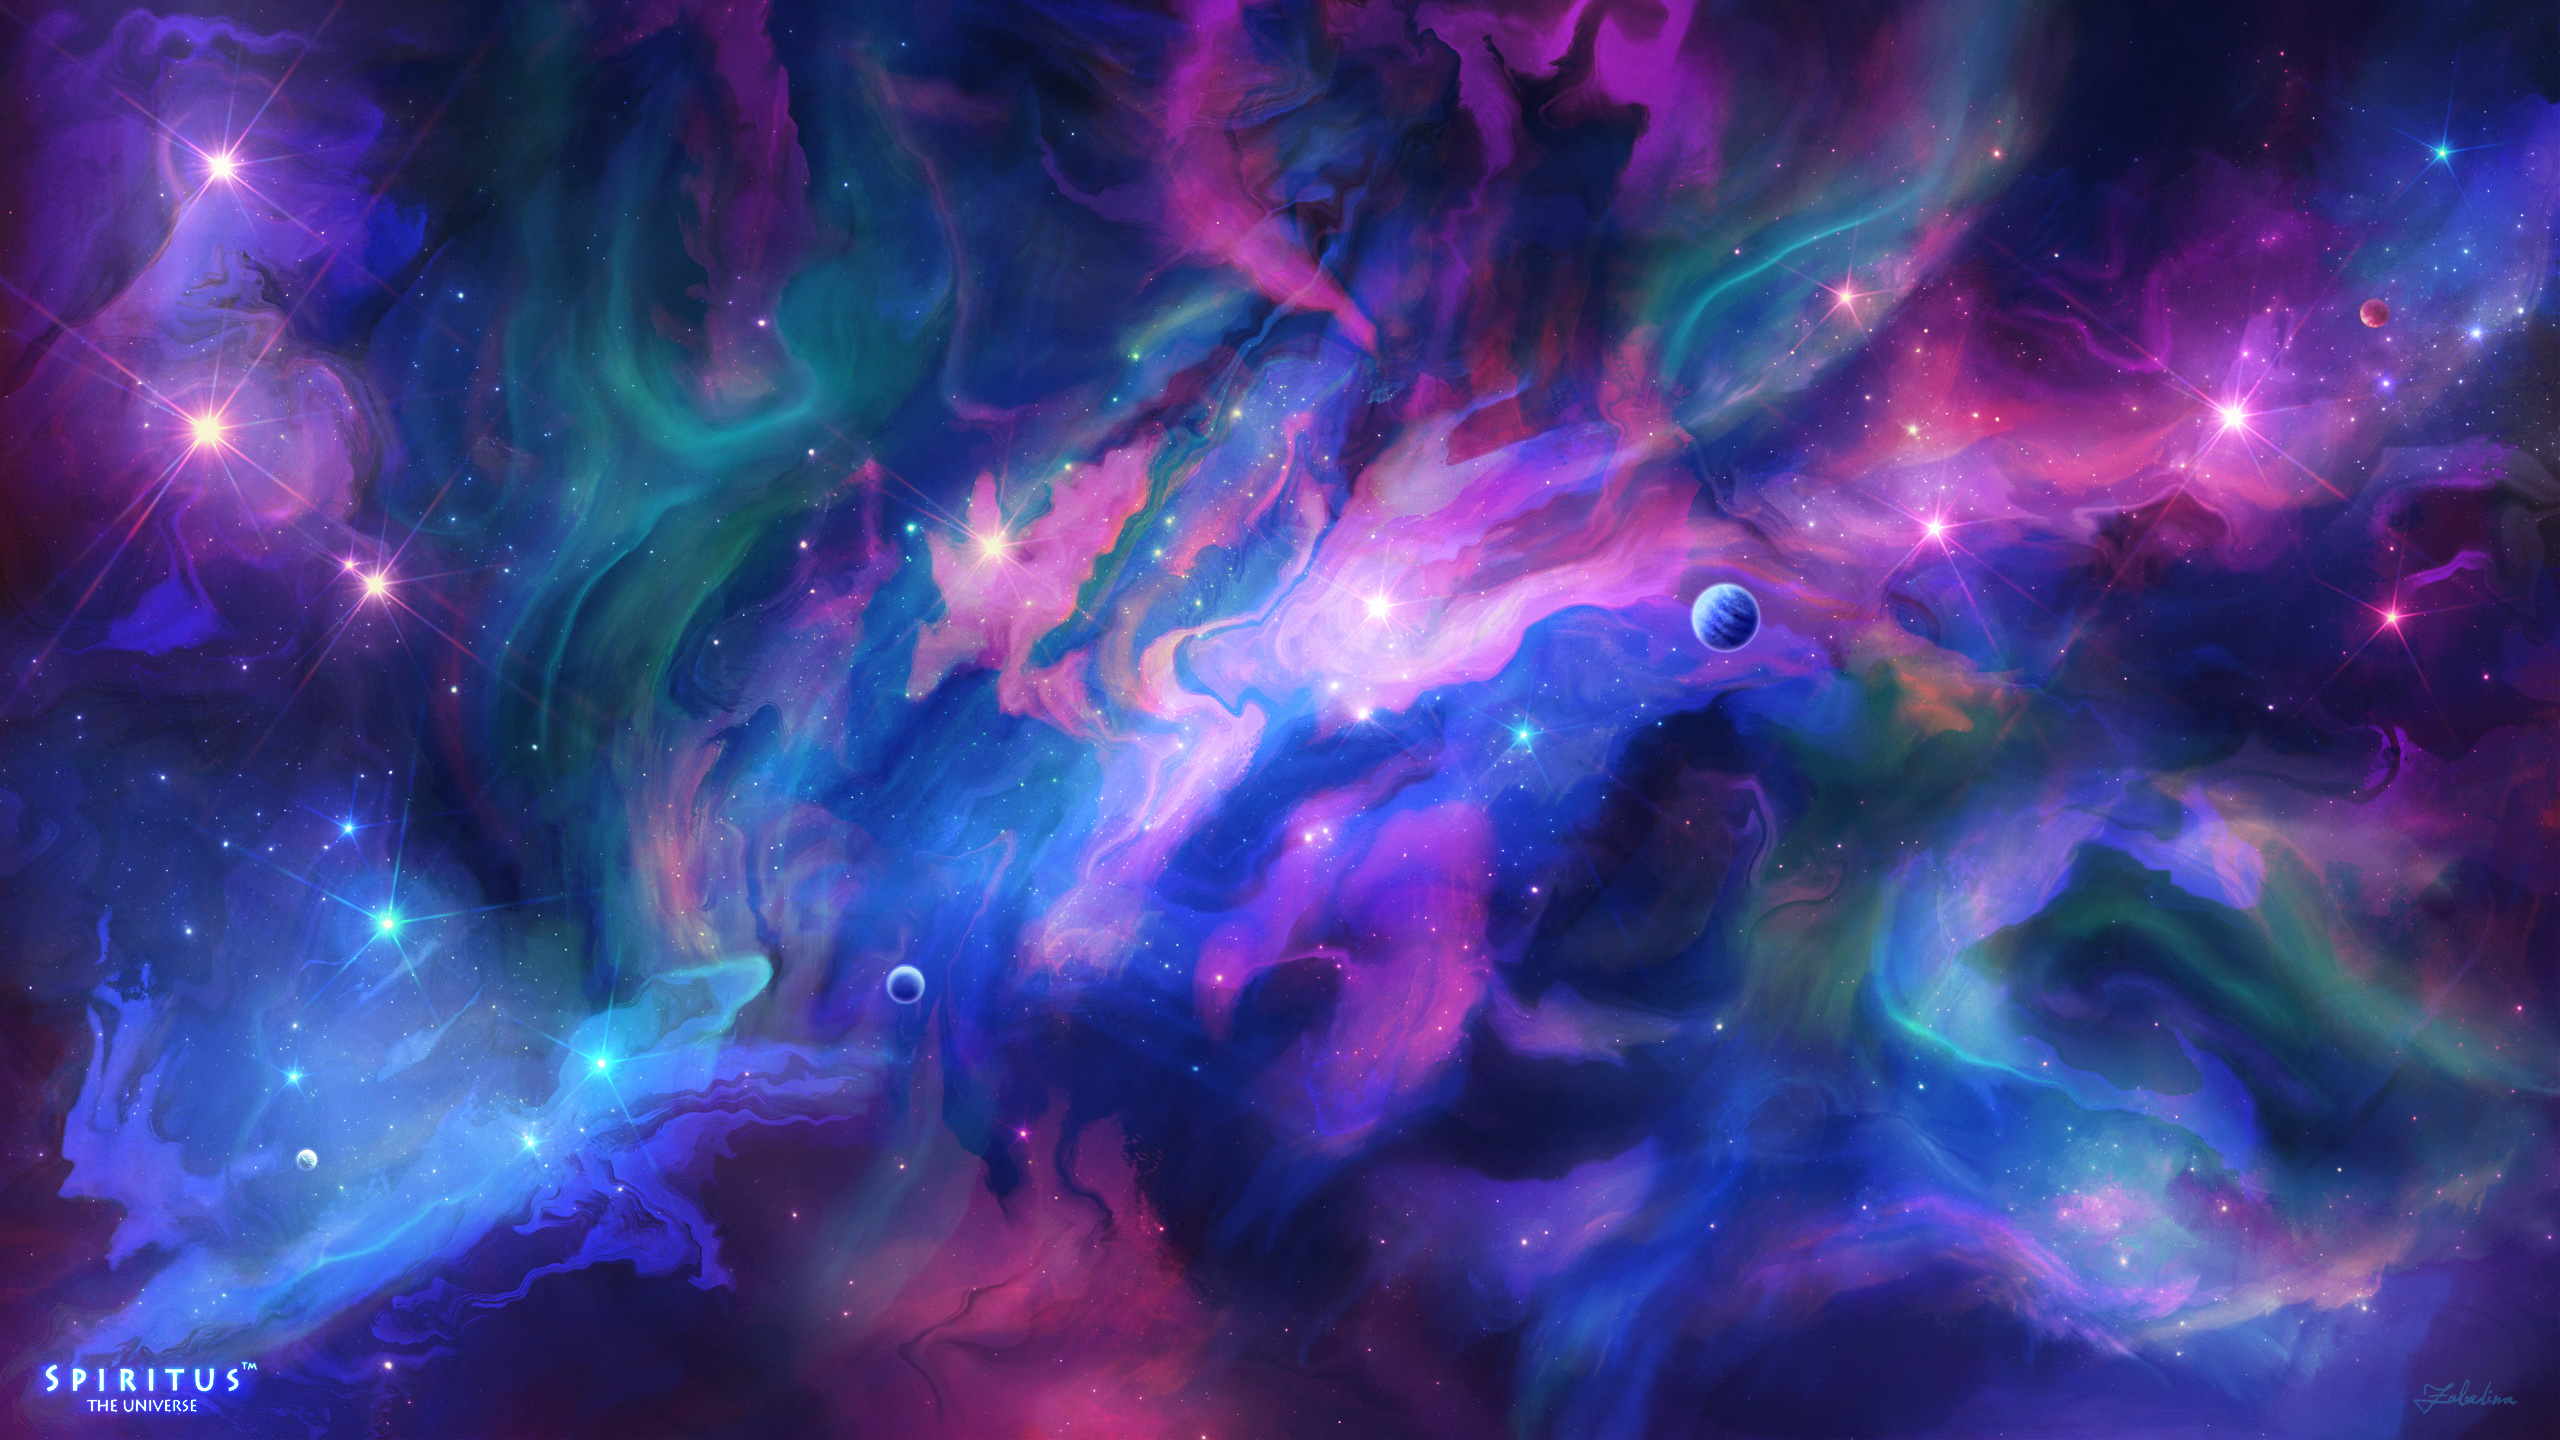 ERA 7 Digital Art Digital Artwork Illustration Space Art Space Galaxy Stars Blue Purple 2560x1440